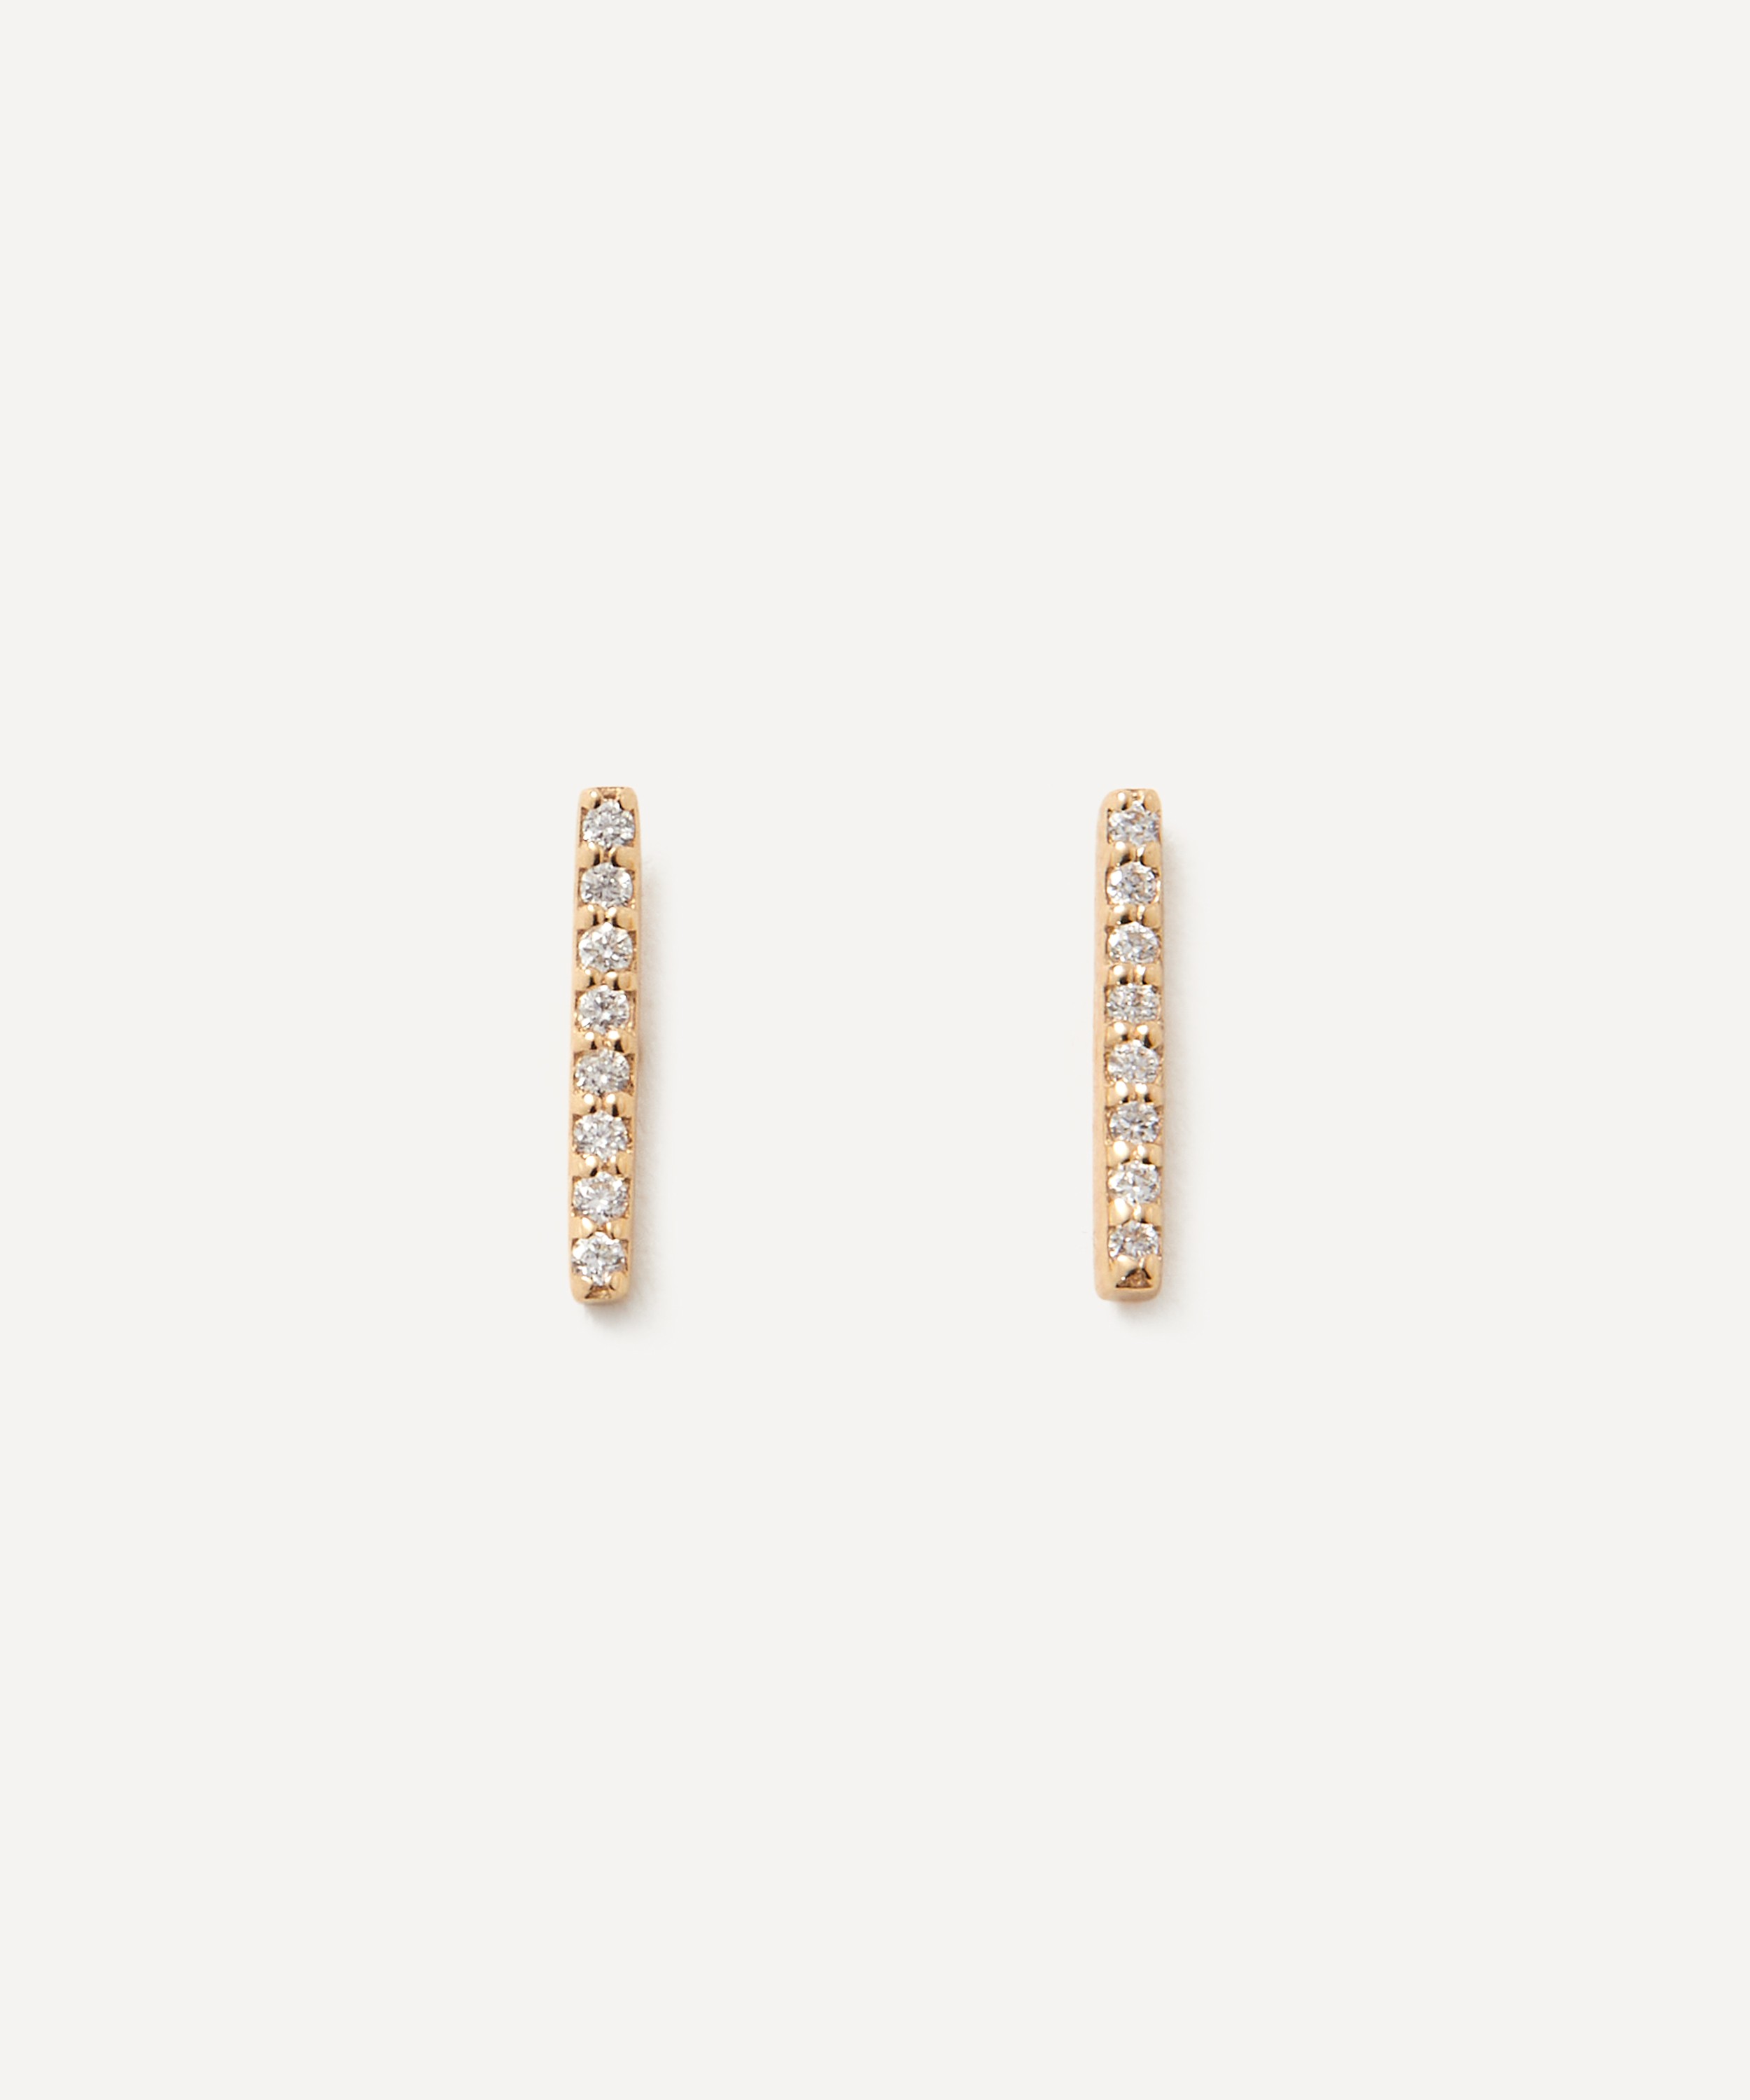 Melissa Joy Manning - 14ct Gold Diamond Linear Stud Earrings